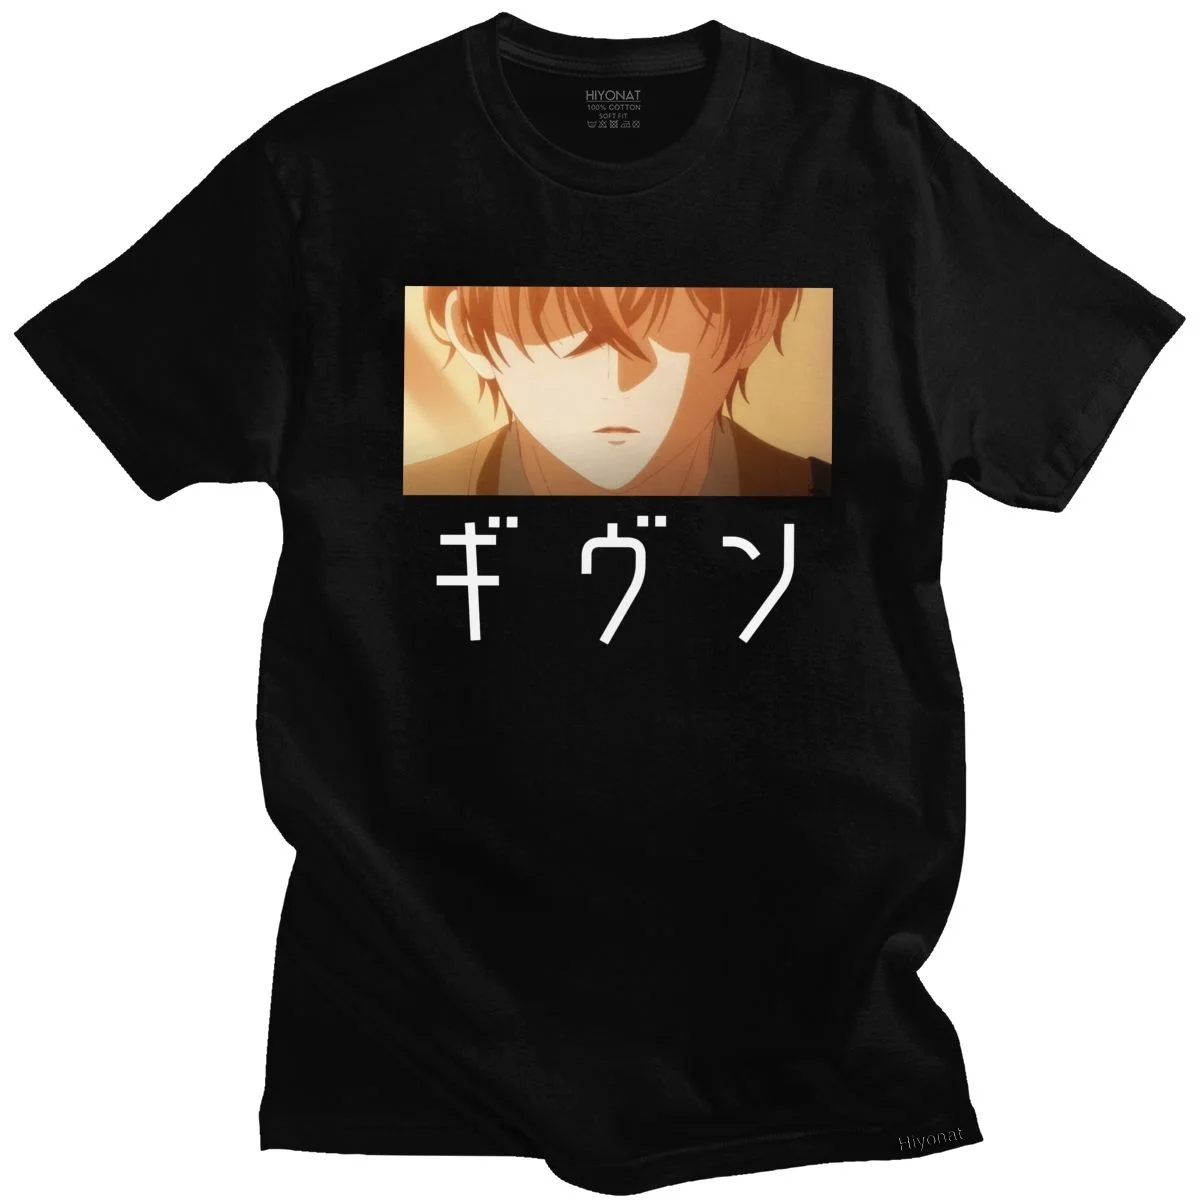 Trendy Men's Given Mafuyu T-Shirt Short Sleeve Cotton Tshirt Casual Japanese Anime Manga Tee Yaoi Bl T Shirt Apparel Gift Idea